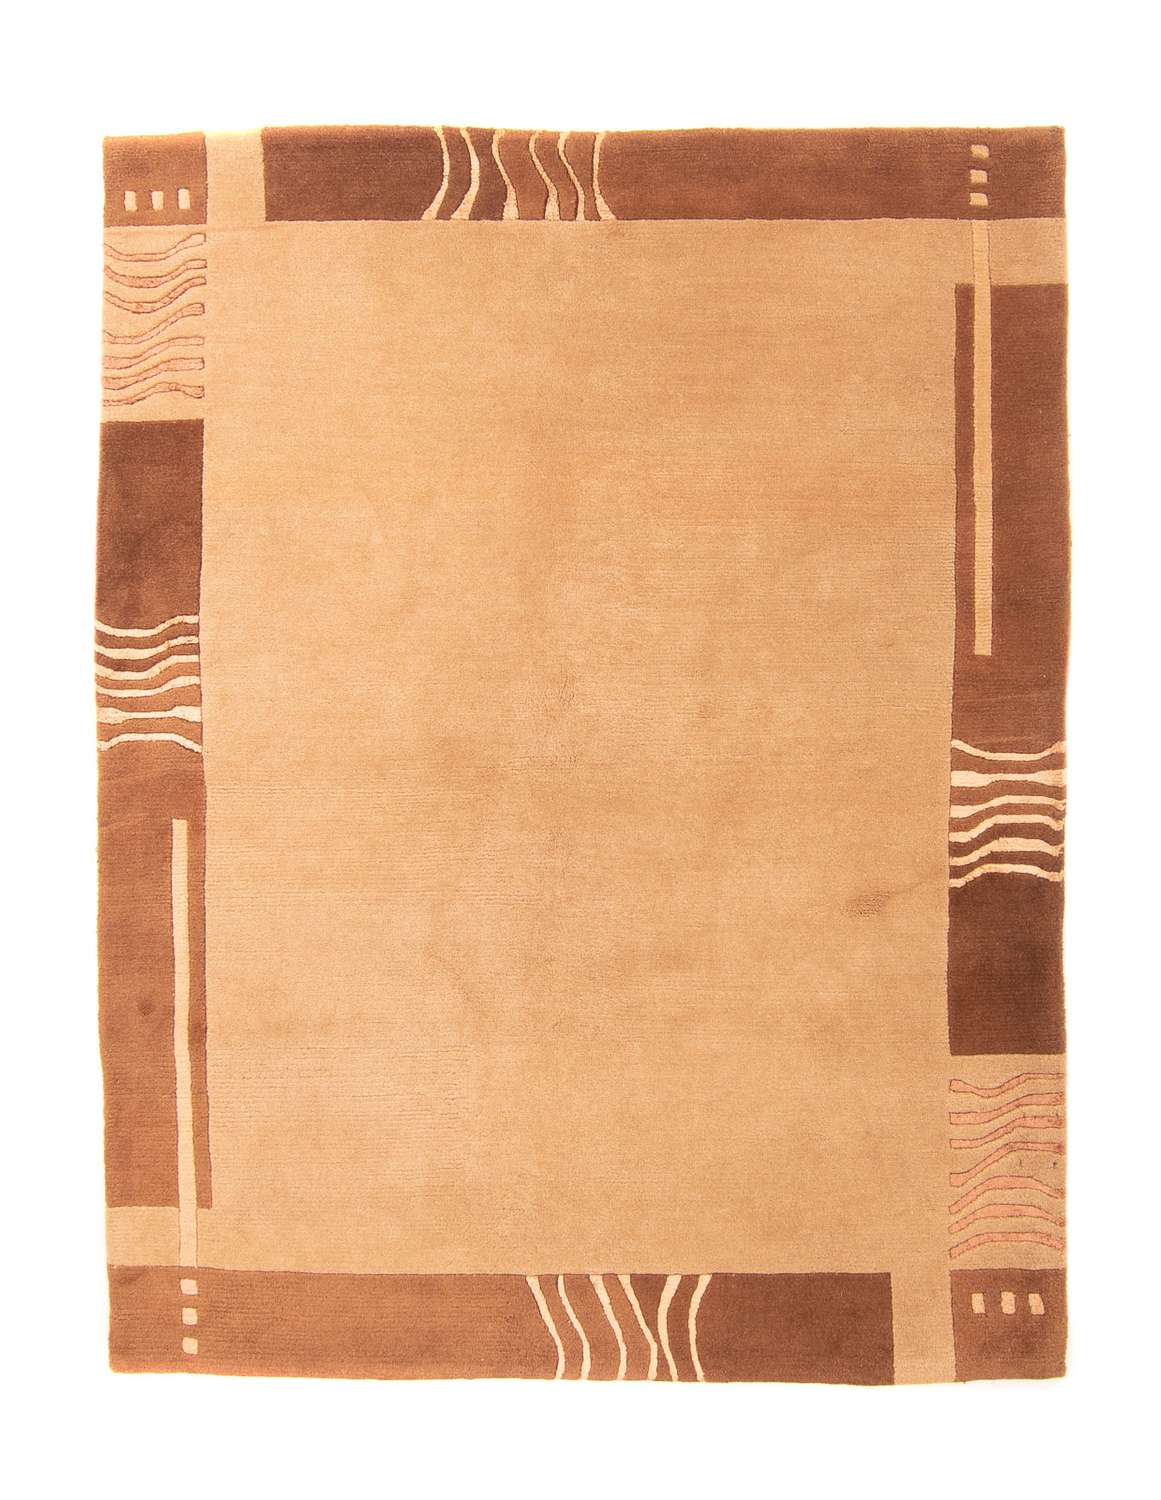 Nepal tapijt - 196 x 147 cm - lichtbruin